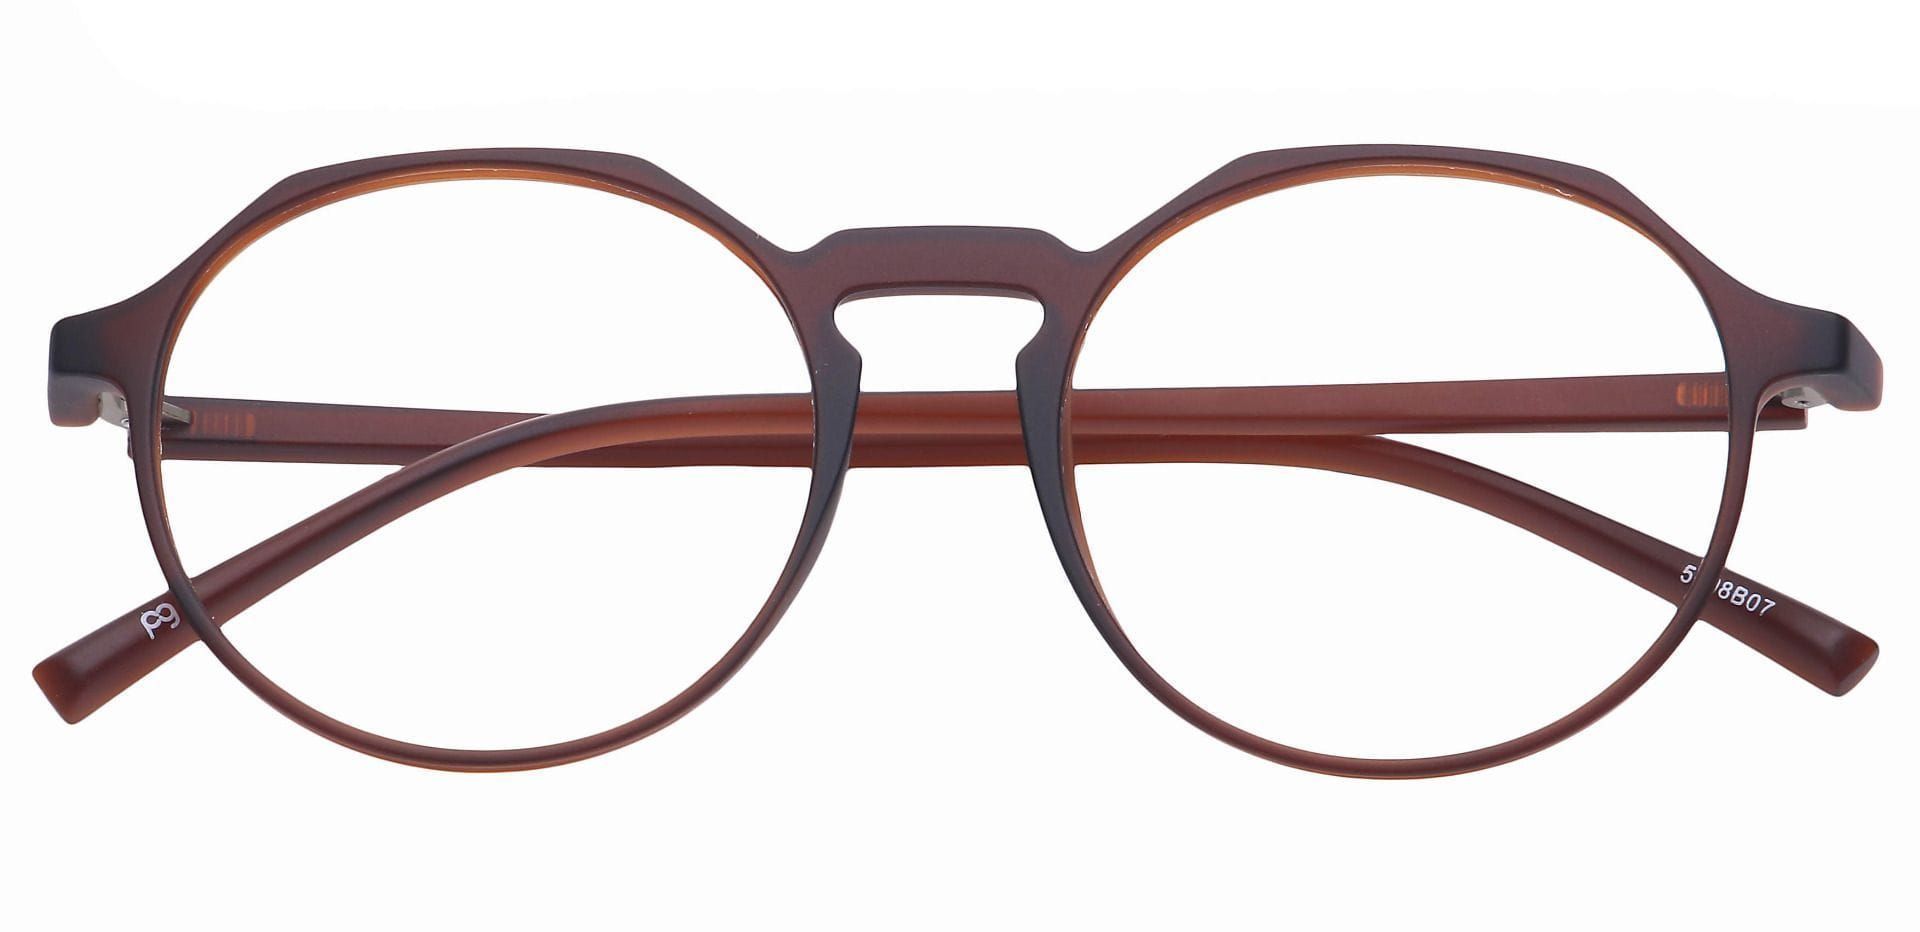 Paragon Oval Non-Rx Glasses - Brown